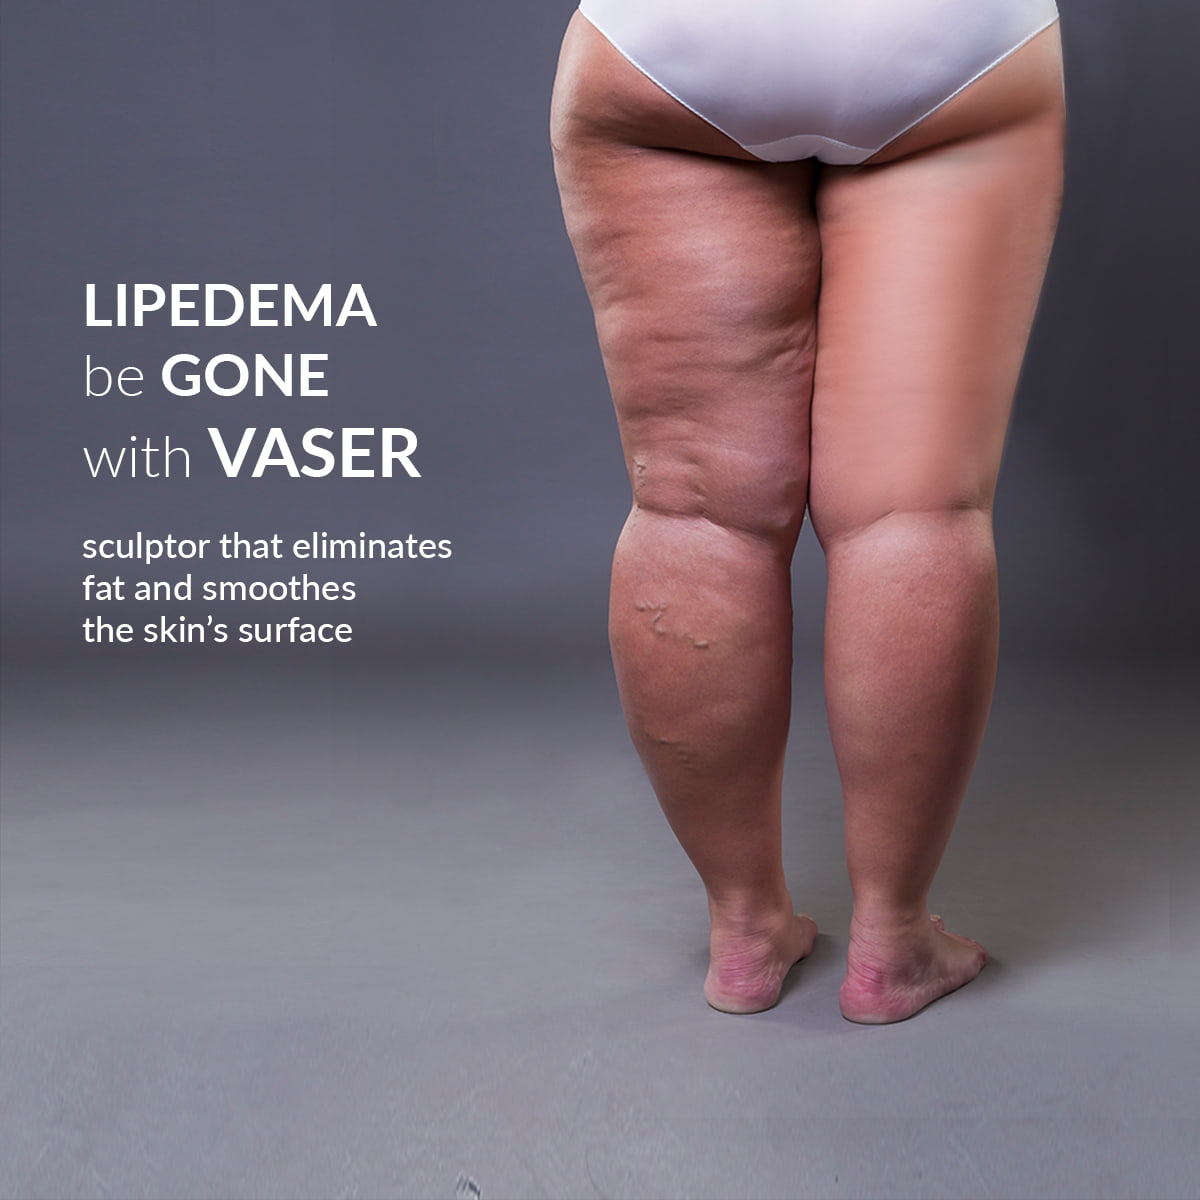 Lipedema: symmetrical bilateral increase of adipose tissue that